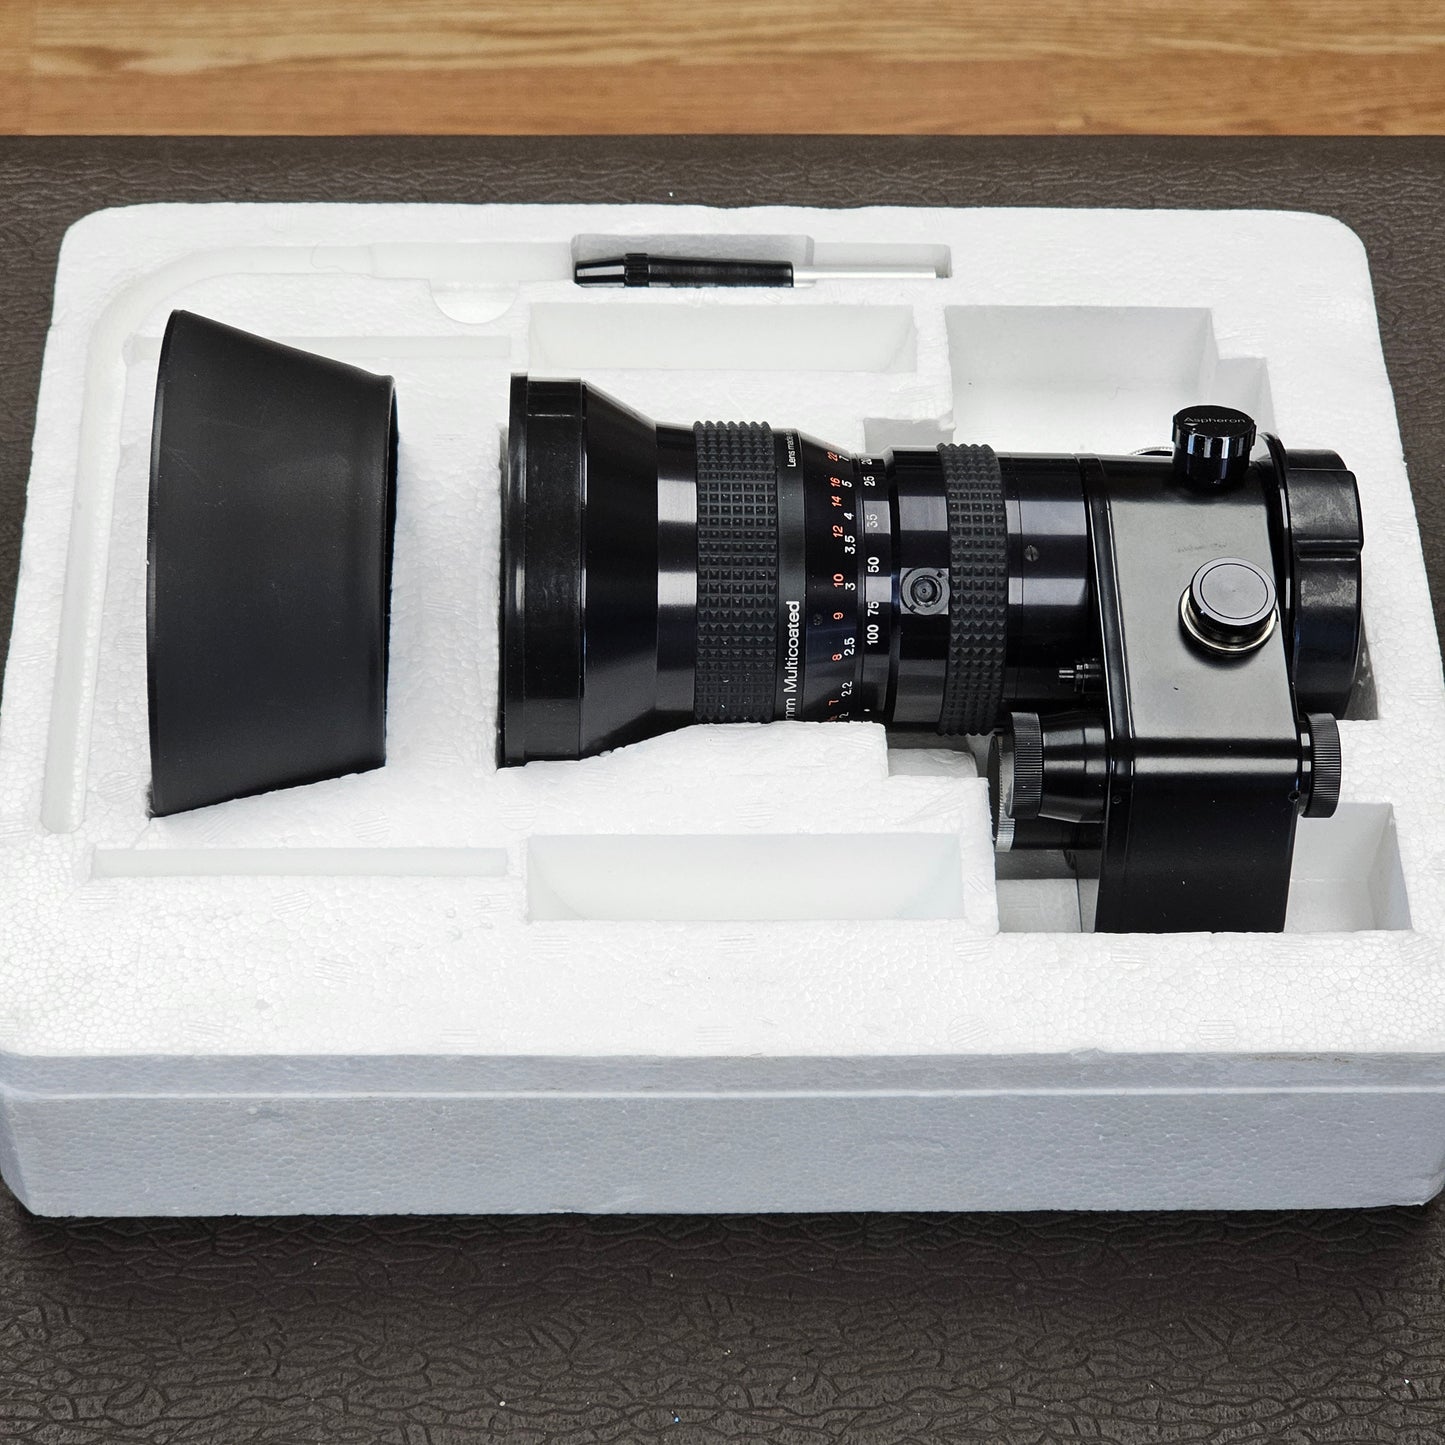 Kern Vario-Switar 100 PTL 12.5mm-100mm t2.5 Multicoated Zoom lens in Bolex Bayonet Mount S# 1120576